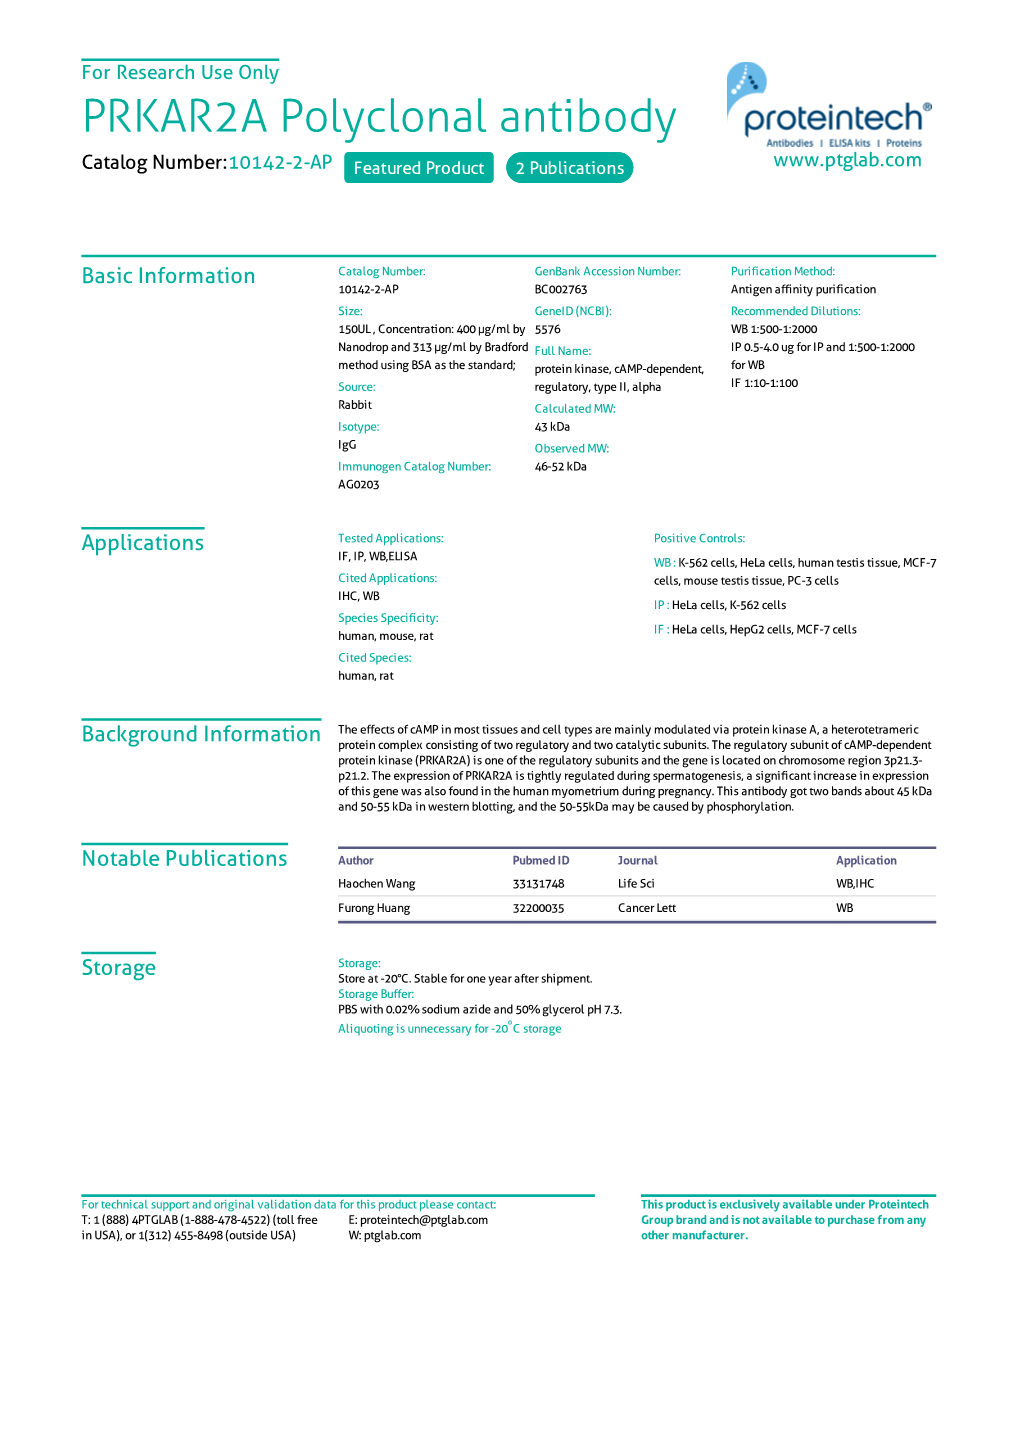 PRKAR2A Polyclonal Antibody Catalog Number:10142-2-AP Featured Product 2 Publications